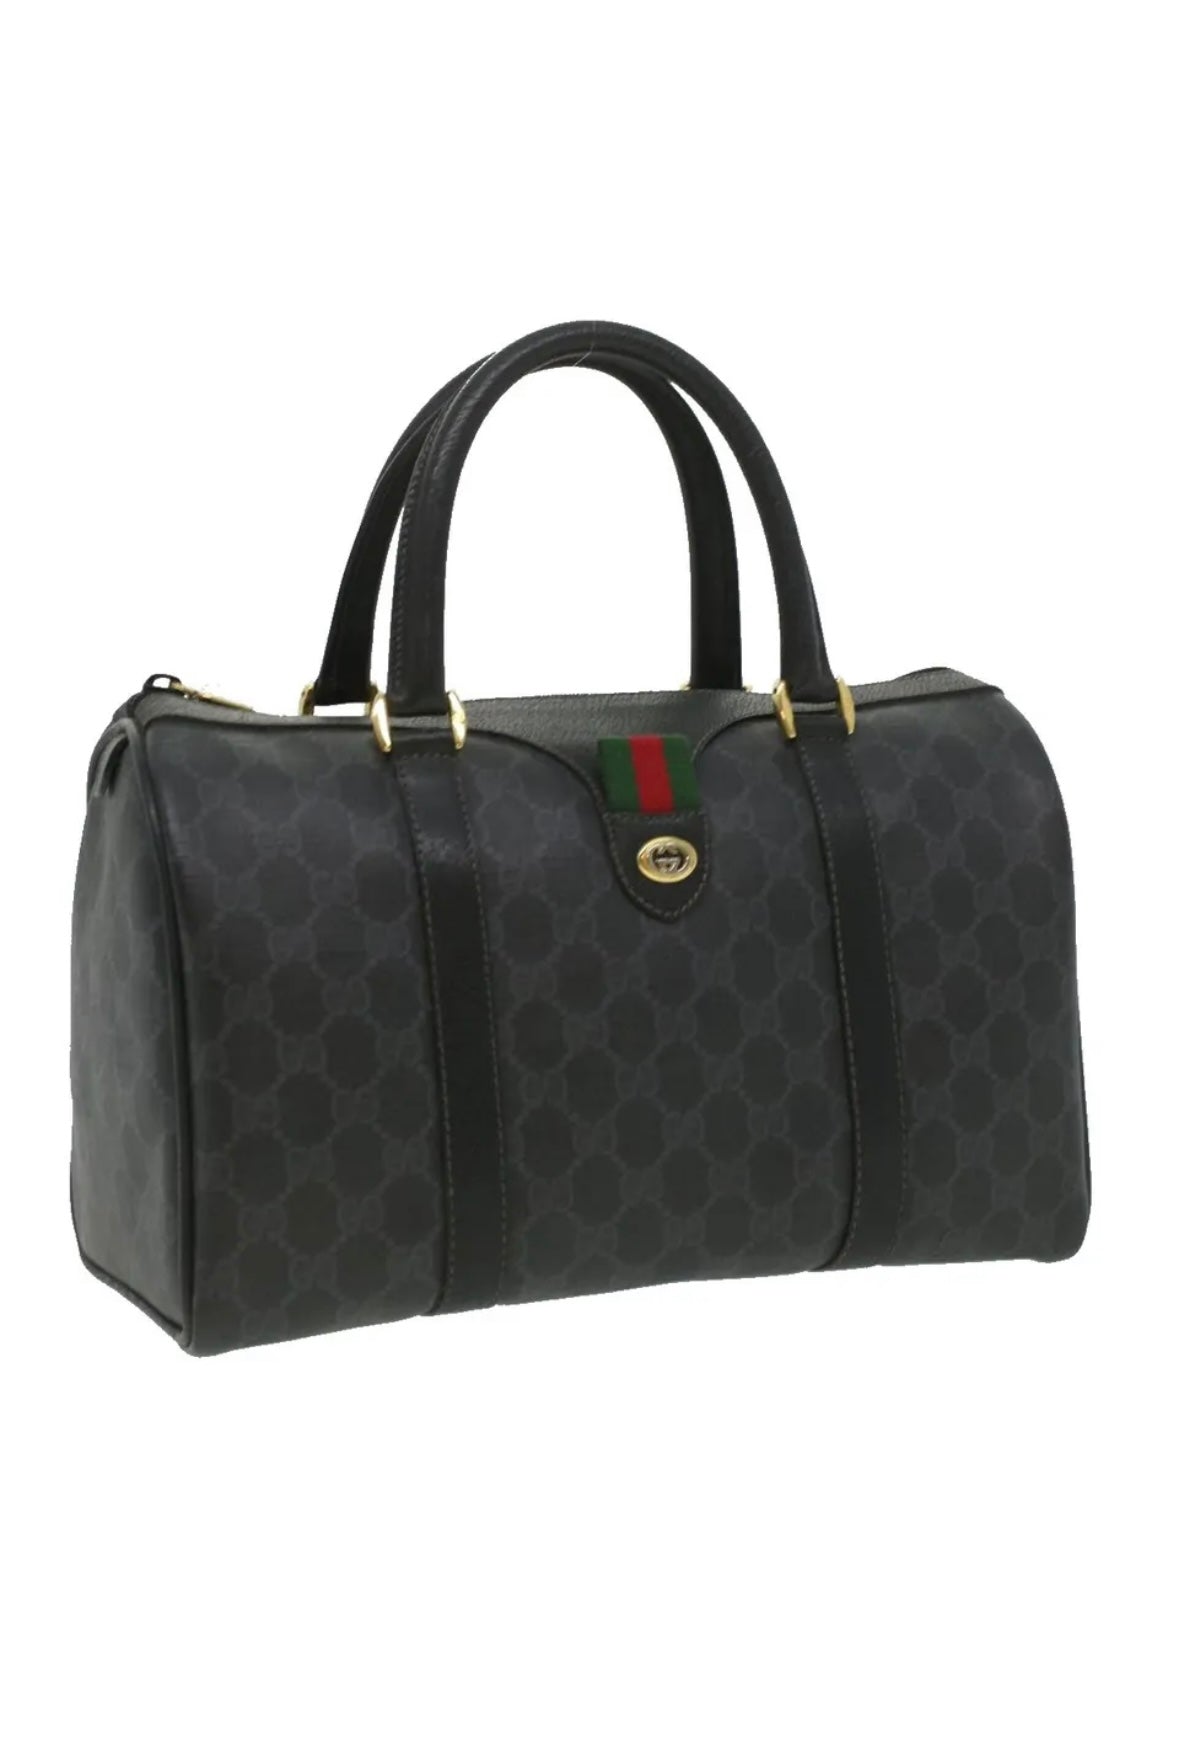 Gucci Boston Handbag in Beige Monogram Canvas and Dark Brown Patent